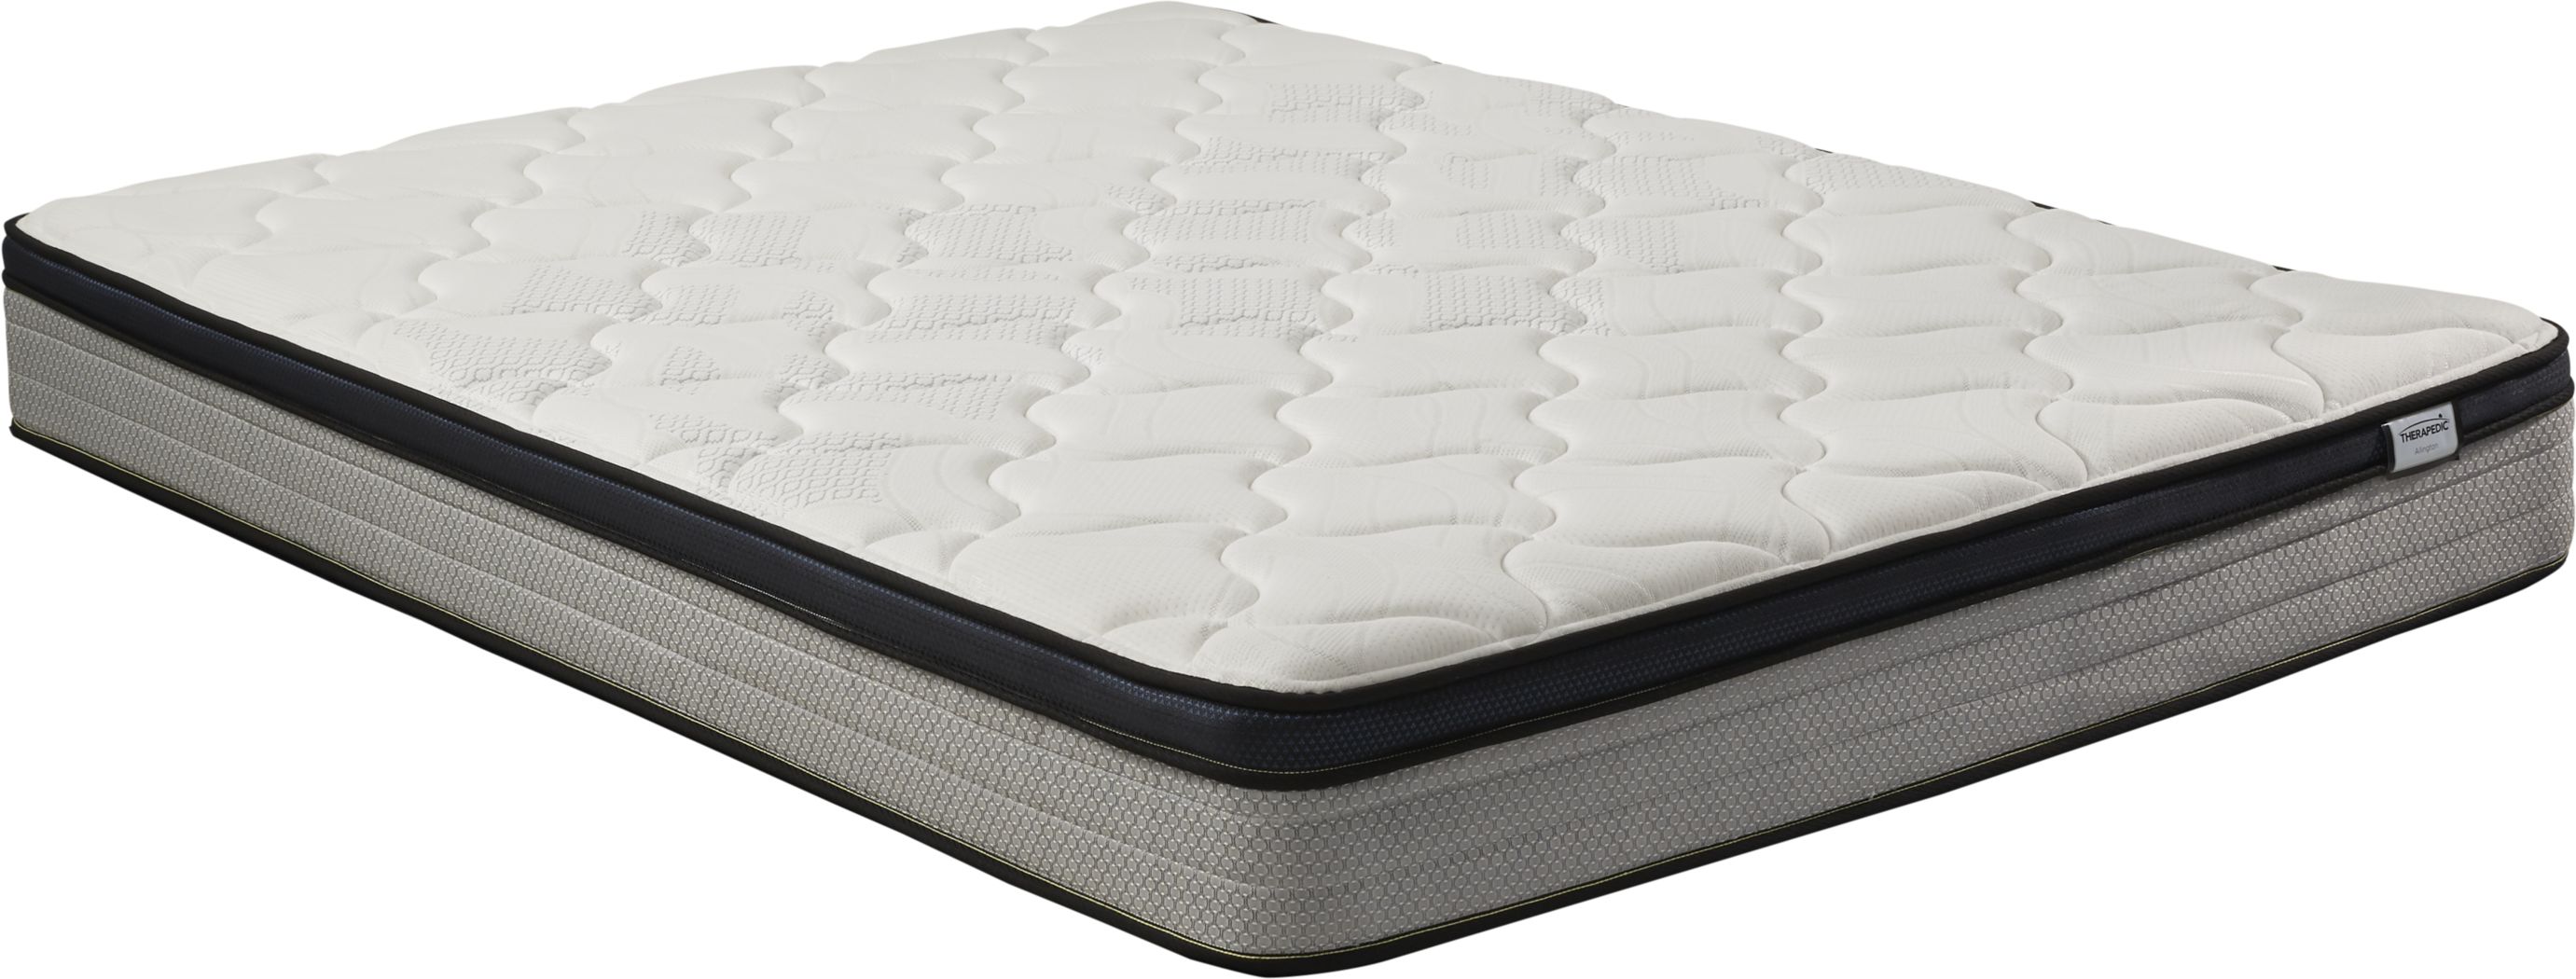 therapedic allington mattress reviews